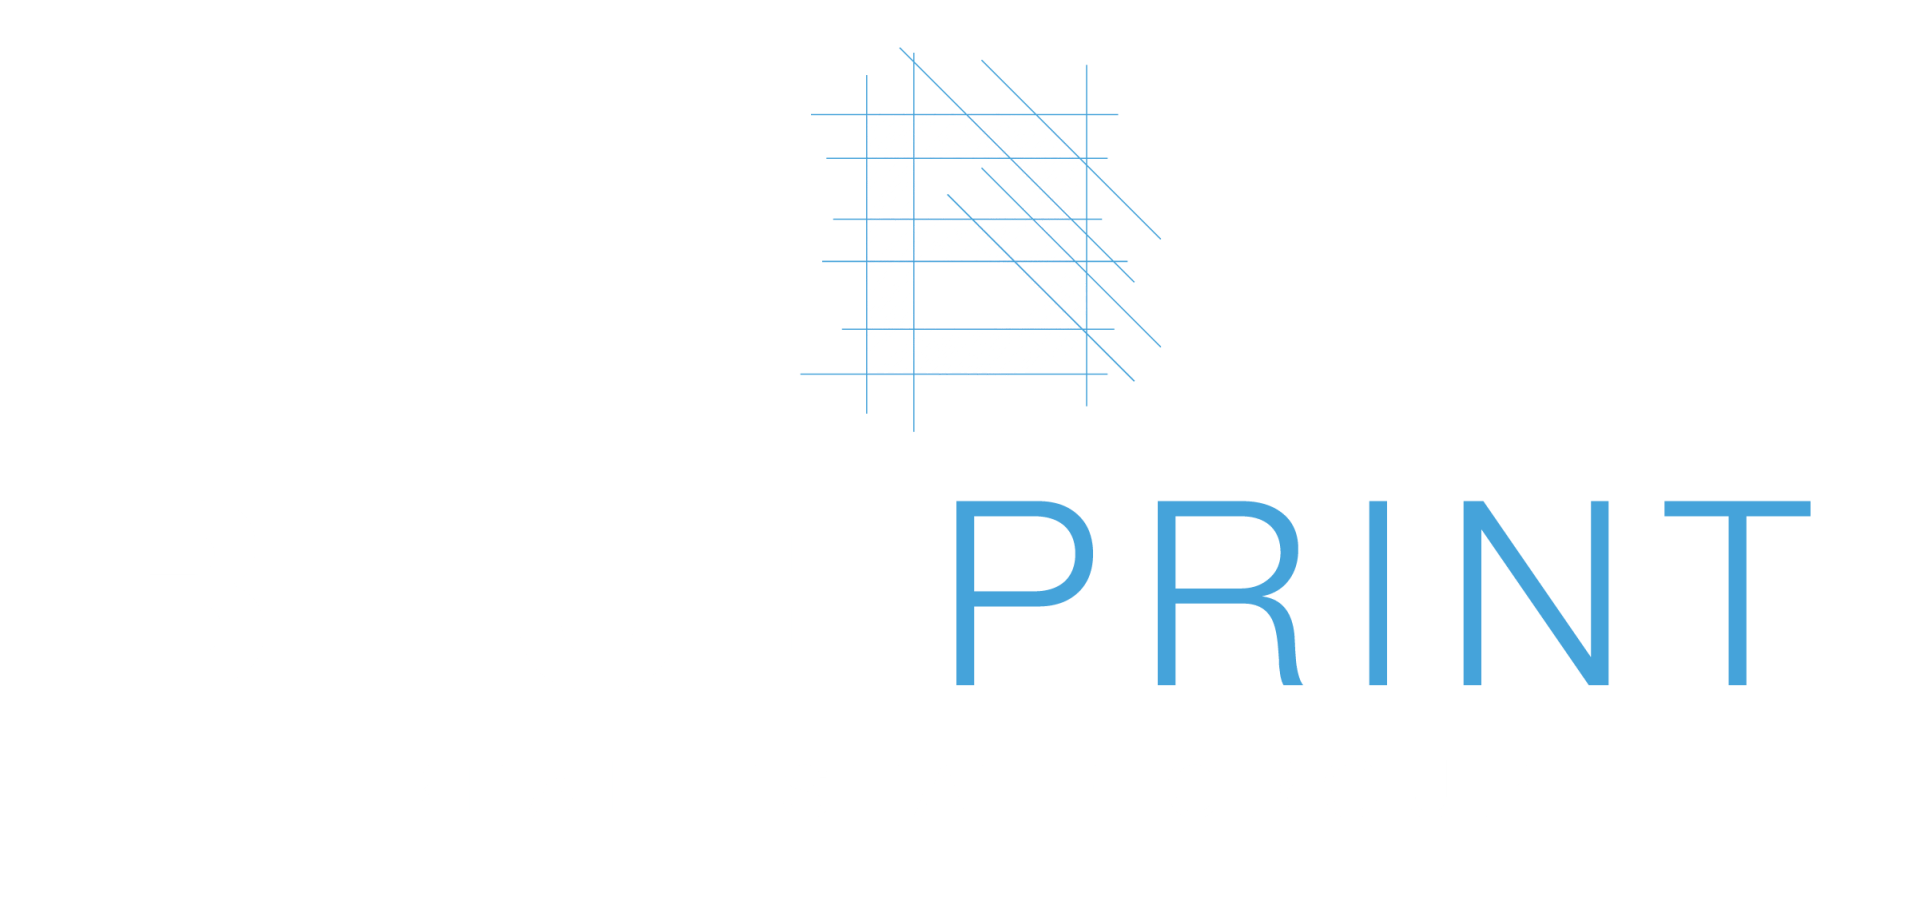 BluePrint Real Estate Group logo